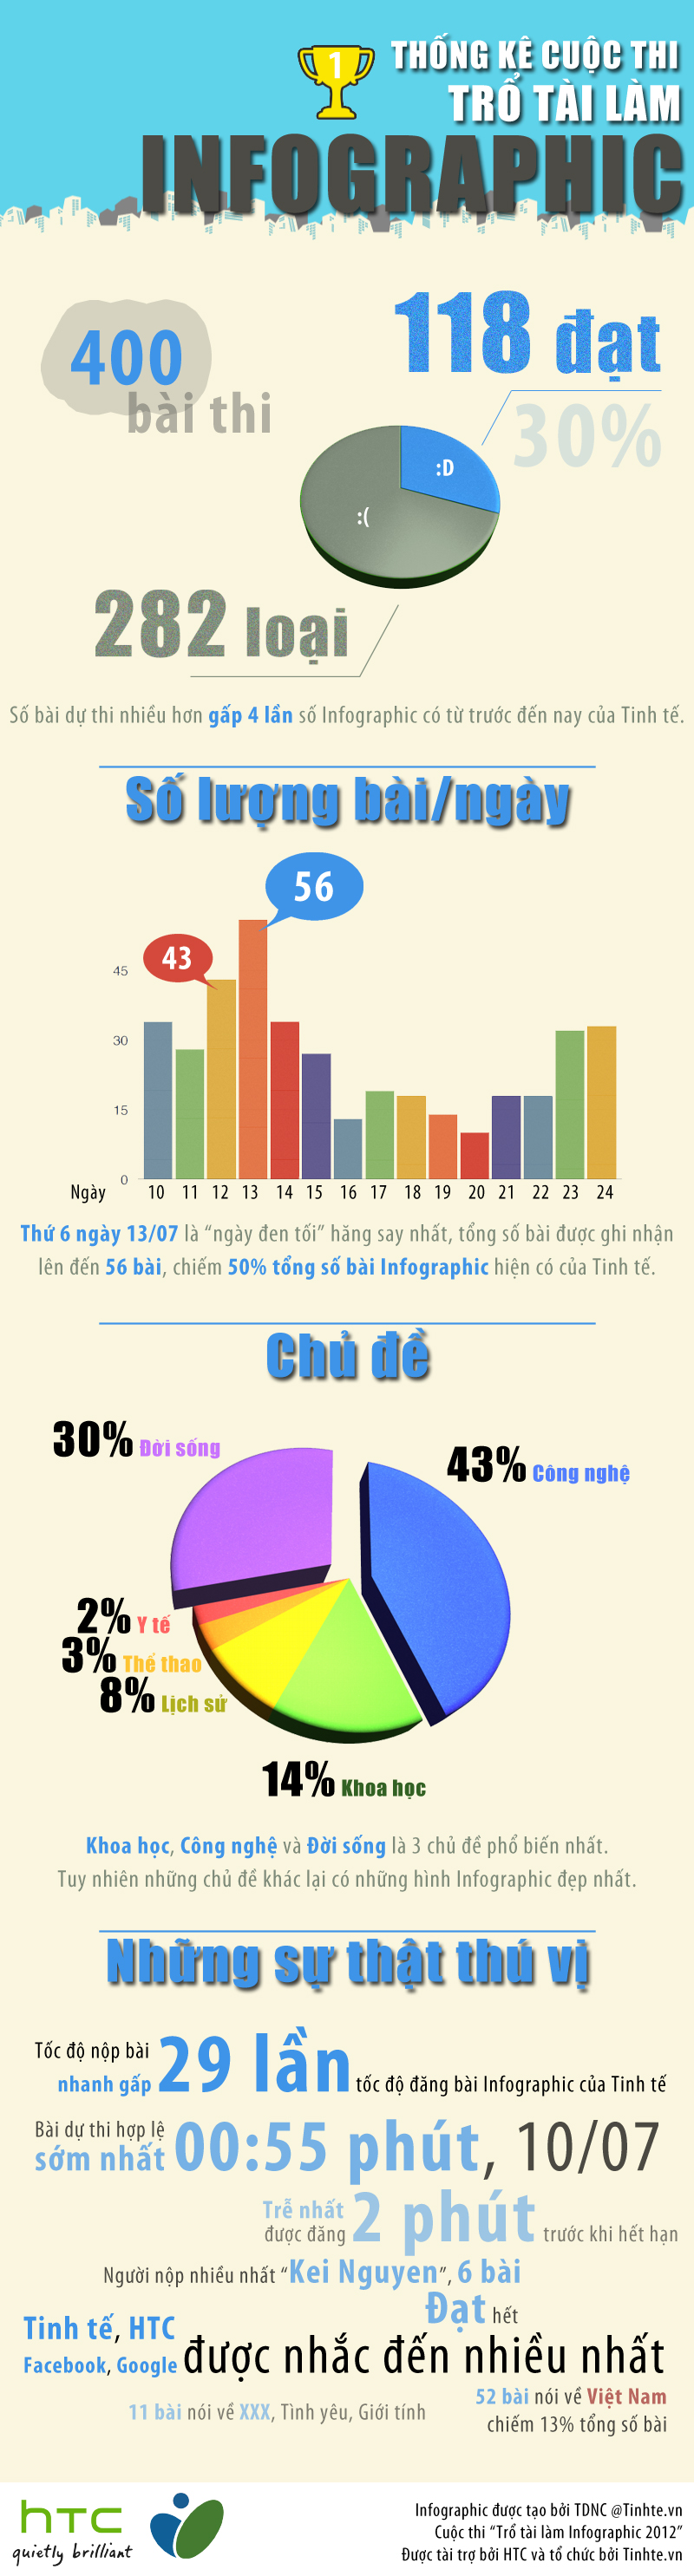 Ket-qua-Infographic.jpg